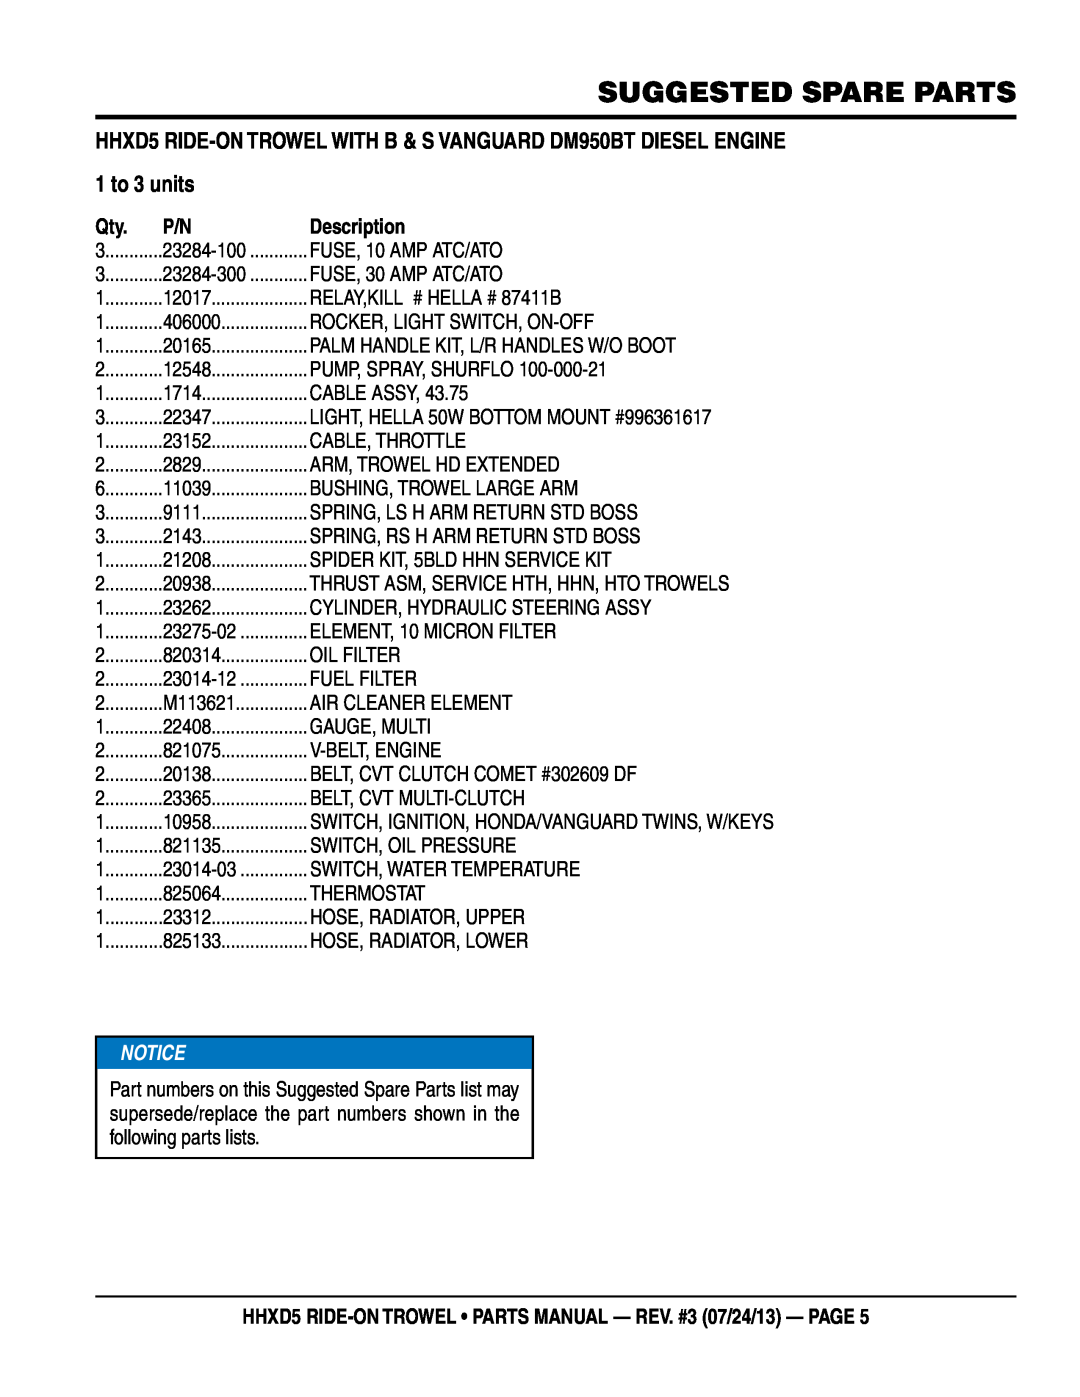 Multiquip HHSD5 Suggested Spare Parts, Description, HHXD5 RIDE-ON TROWEL parts manual - rev. #3 07/24/13 - page 